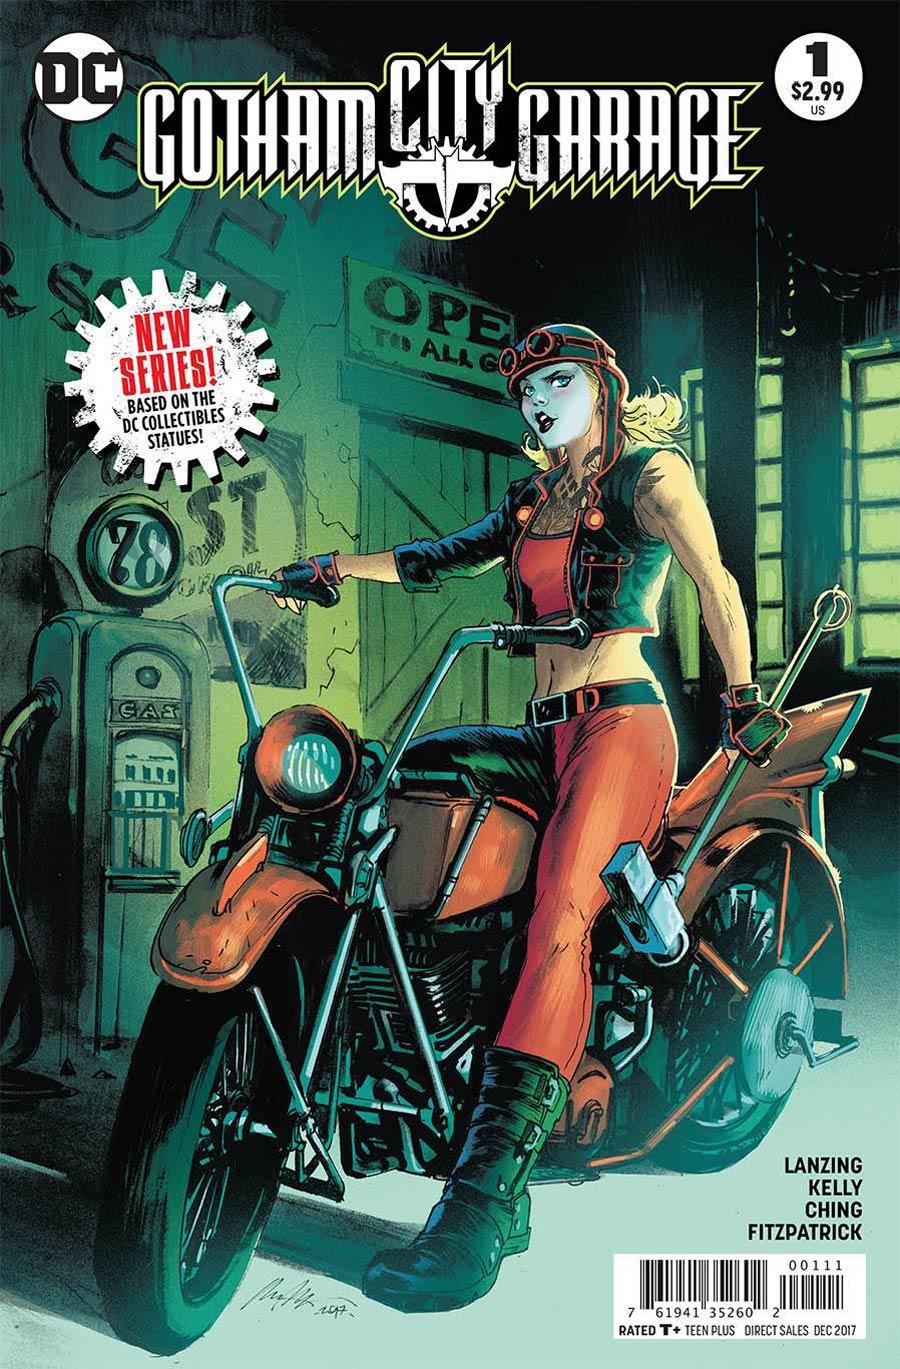 Gotham City Garage Vol. 1 #1